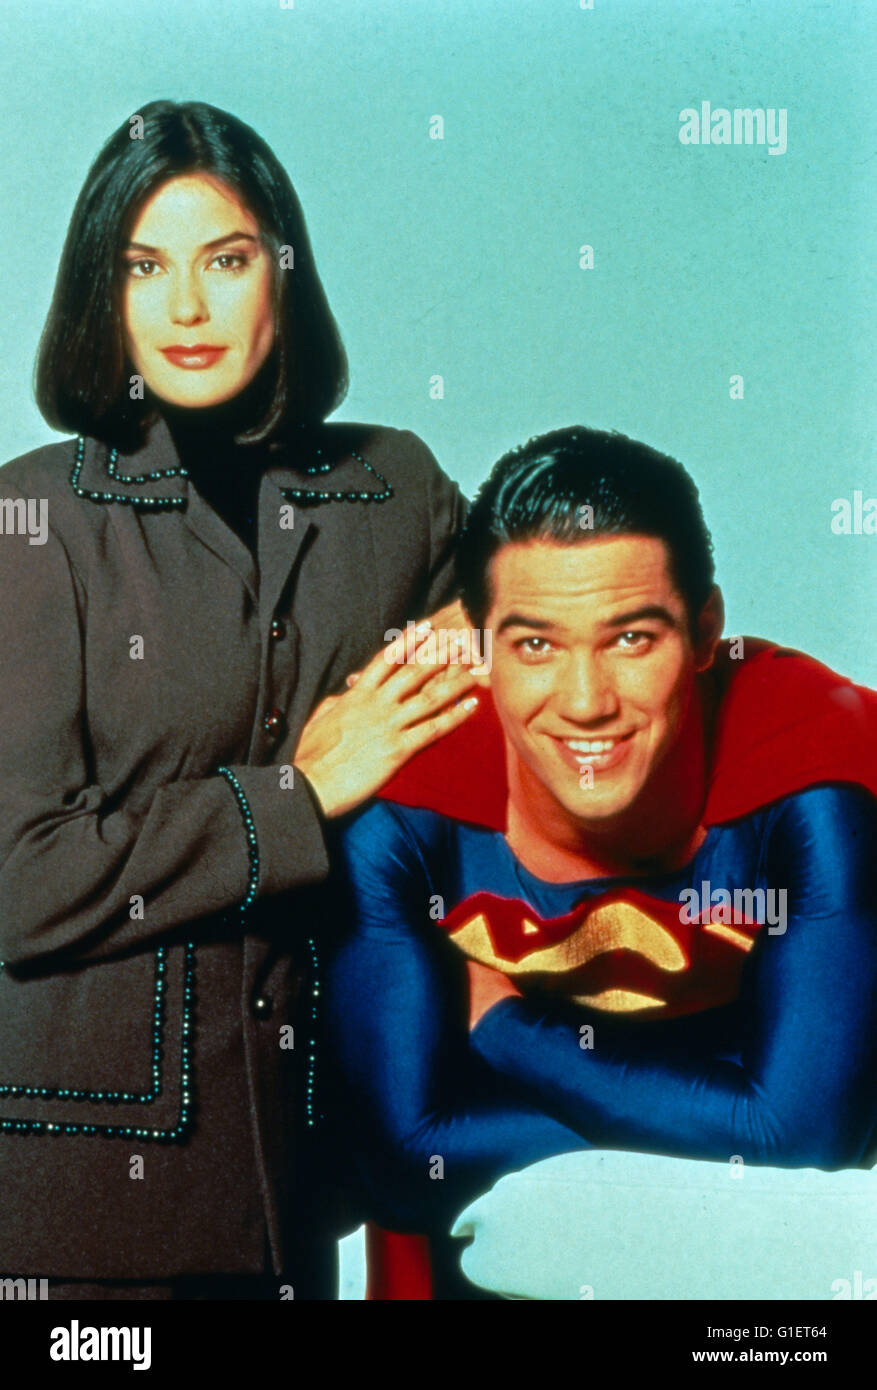 Lois e Clark: Le nuove avventure di Superman, aka: Superman - Die Abenteuer von Lois e Clark, Fernsehserie, USA 1993 - 1997, Darsteller: Dean Cain, Teri Hatcher Foto Stock